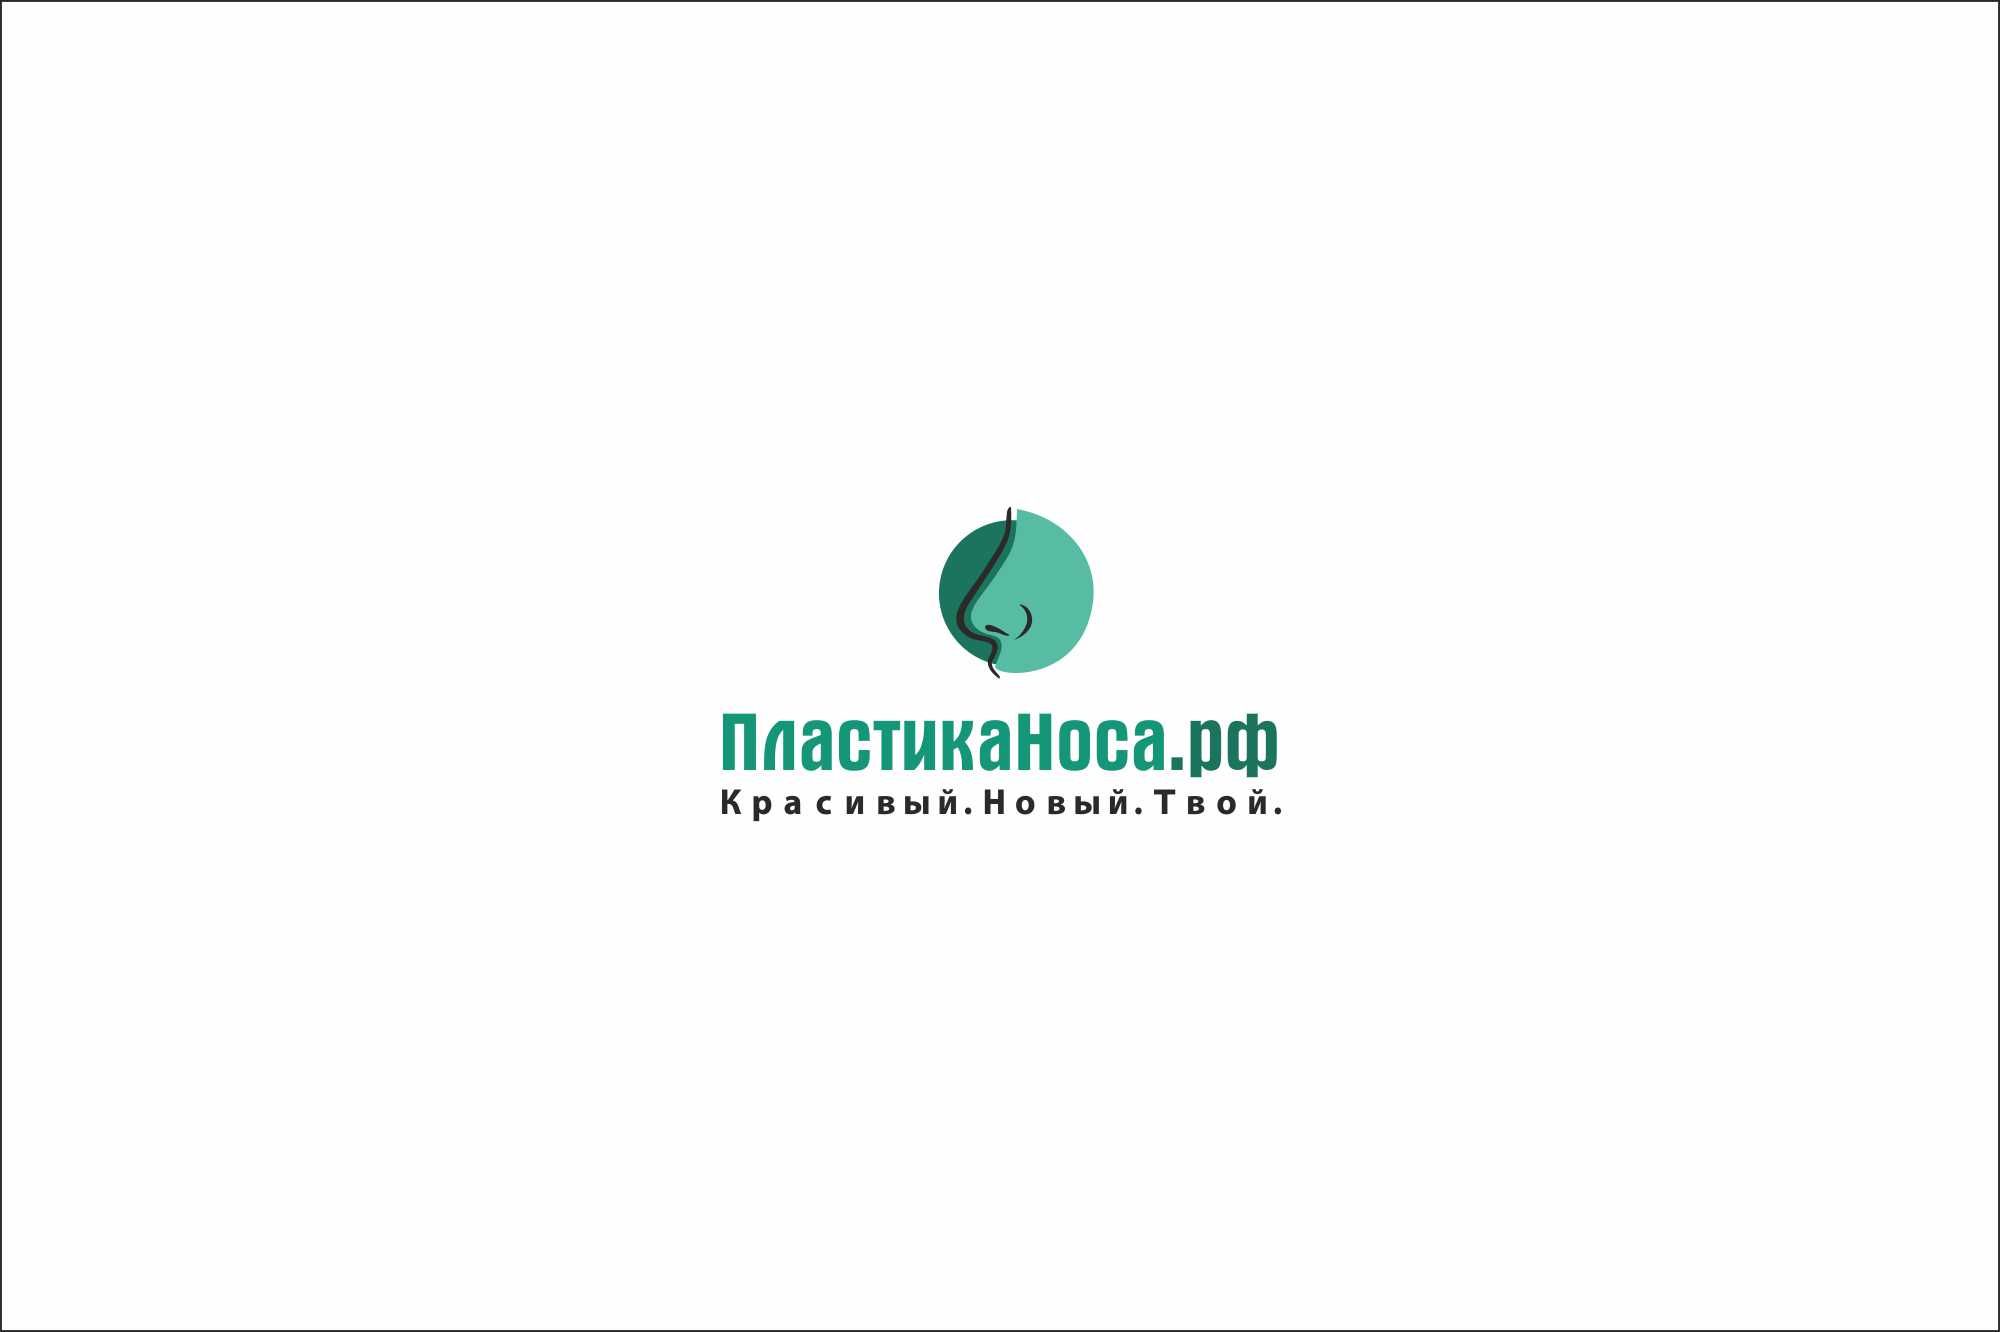 Логотип ПластикаНоса.рф - дизайнер Dobromira